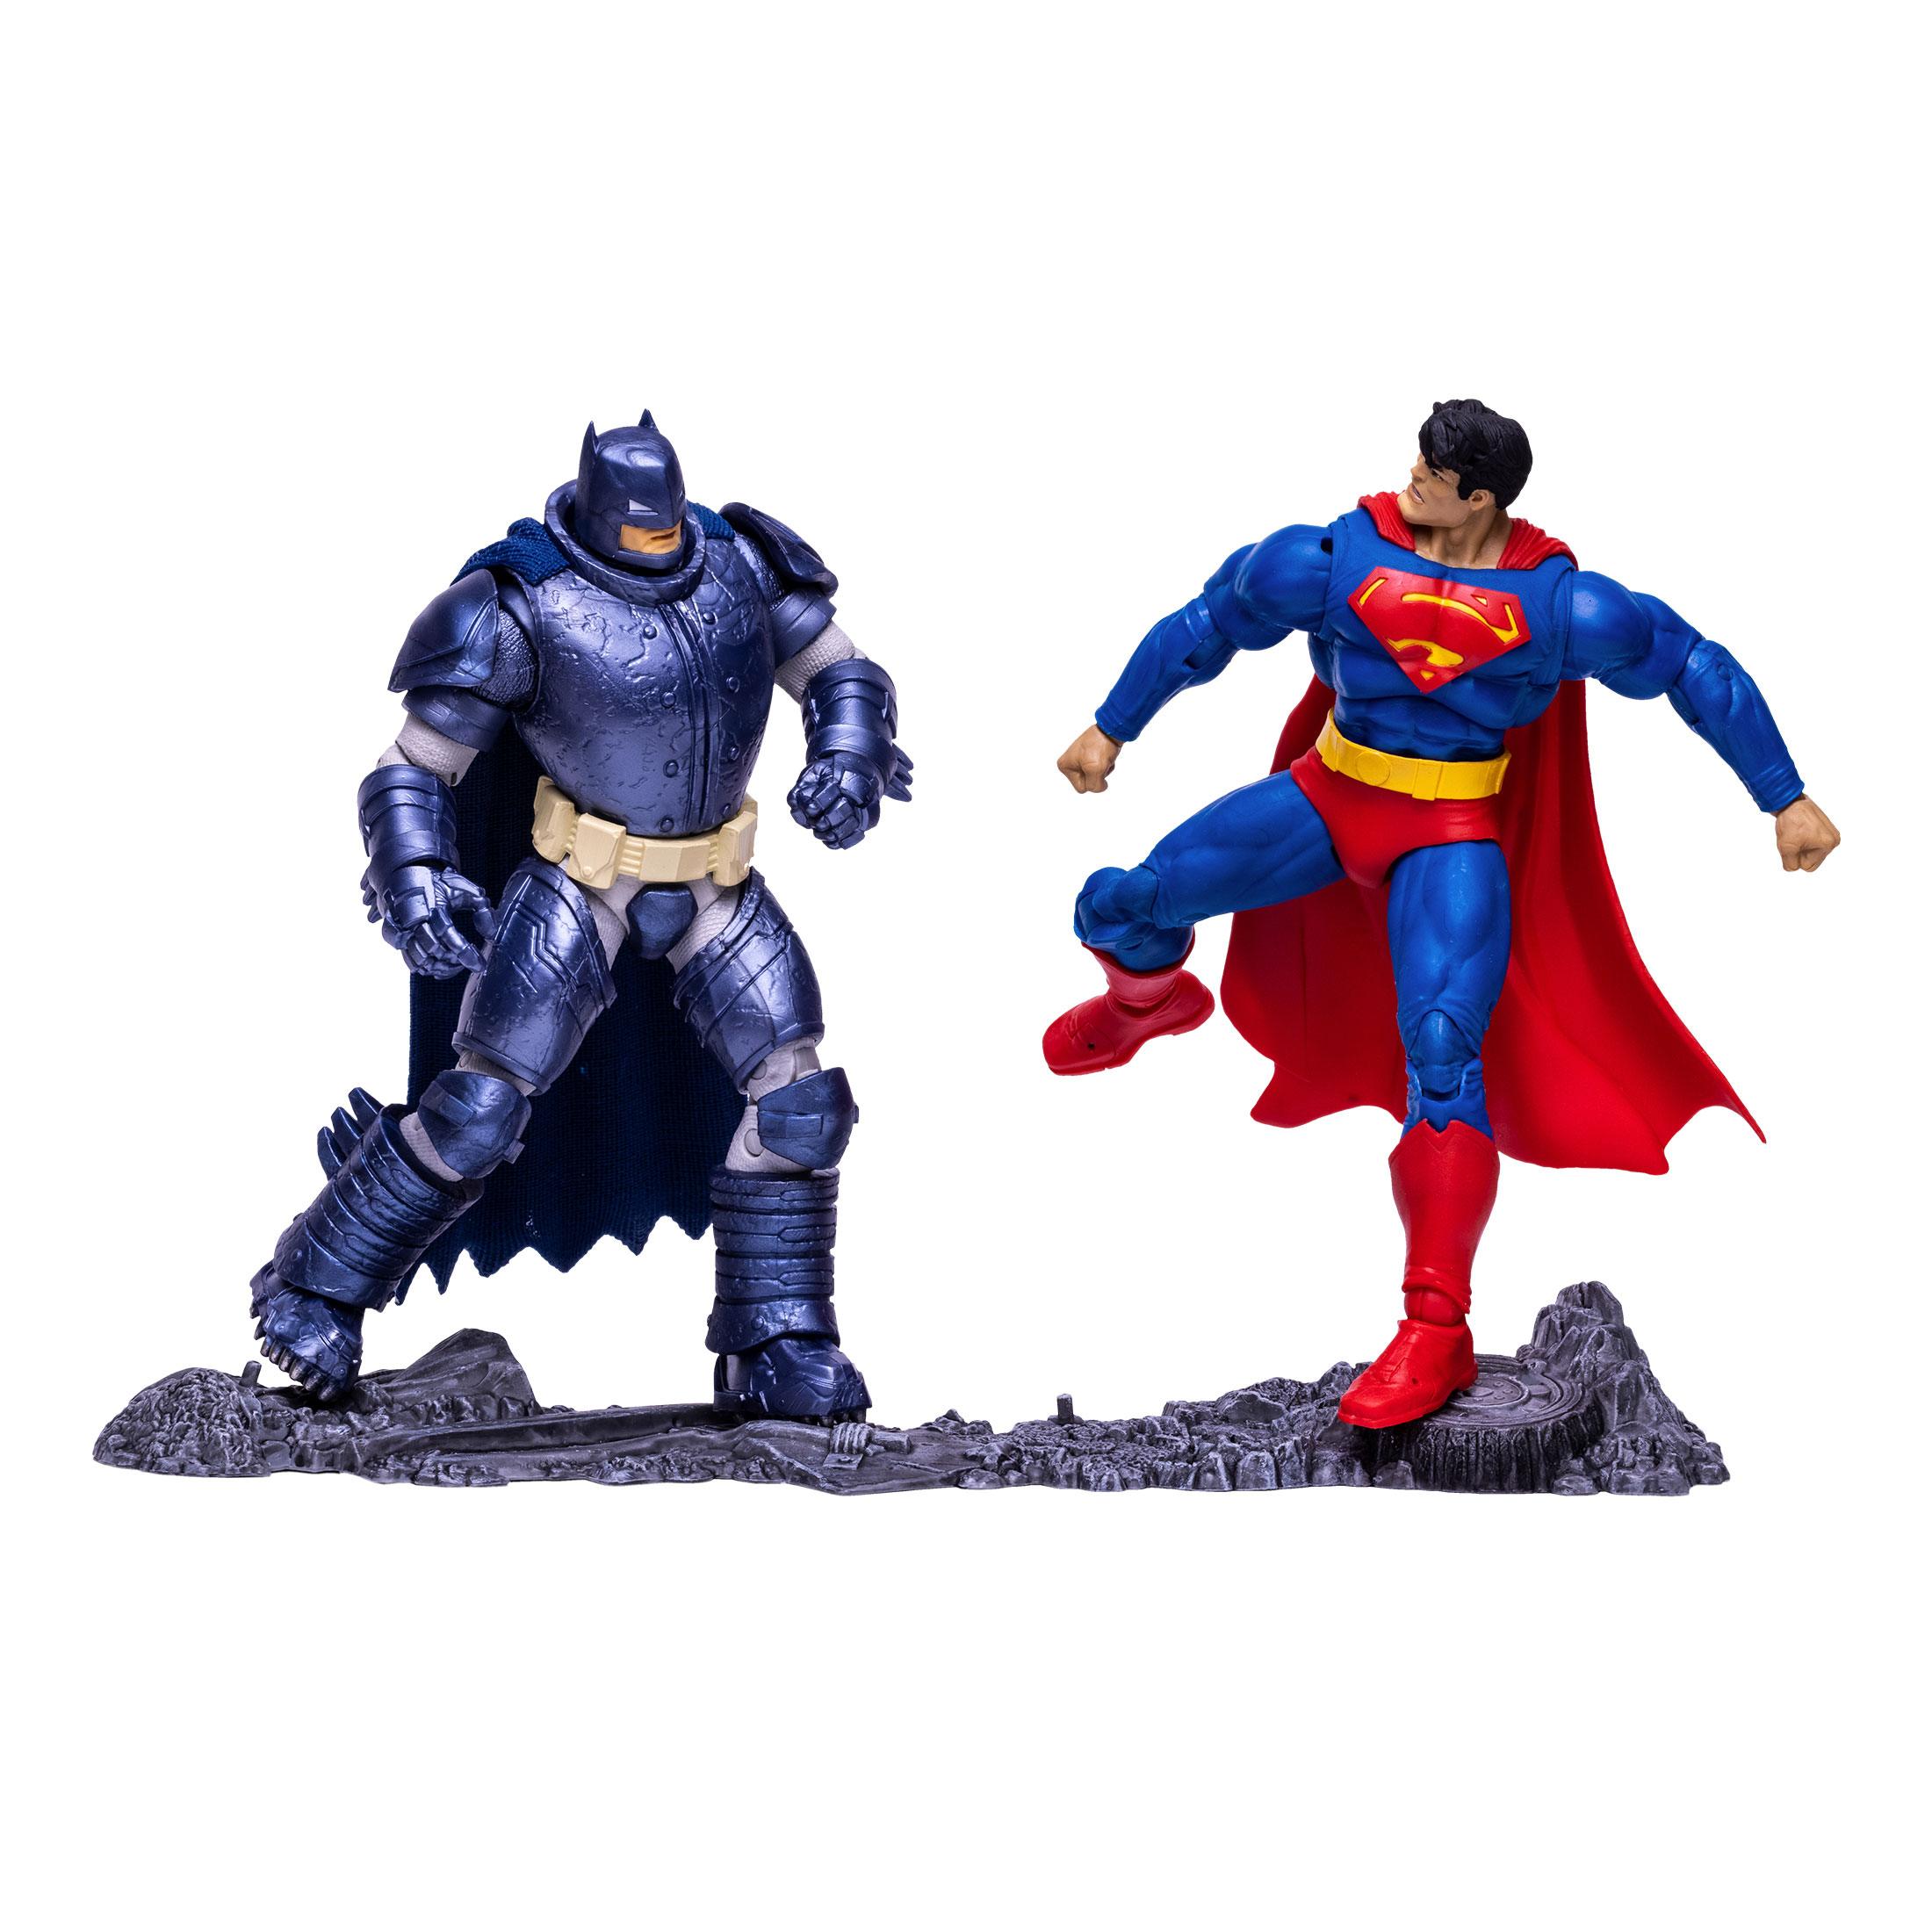 DC Actionfiguren Collector Multipack Superman vs. Armored Batman 18 cm MCF15457 787926154573